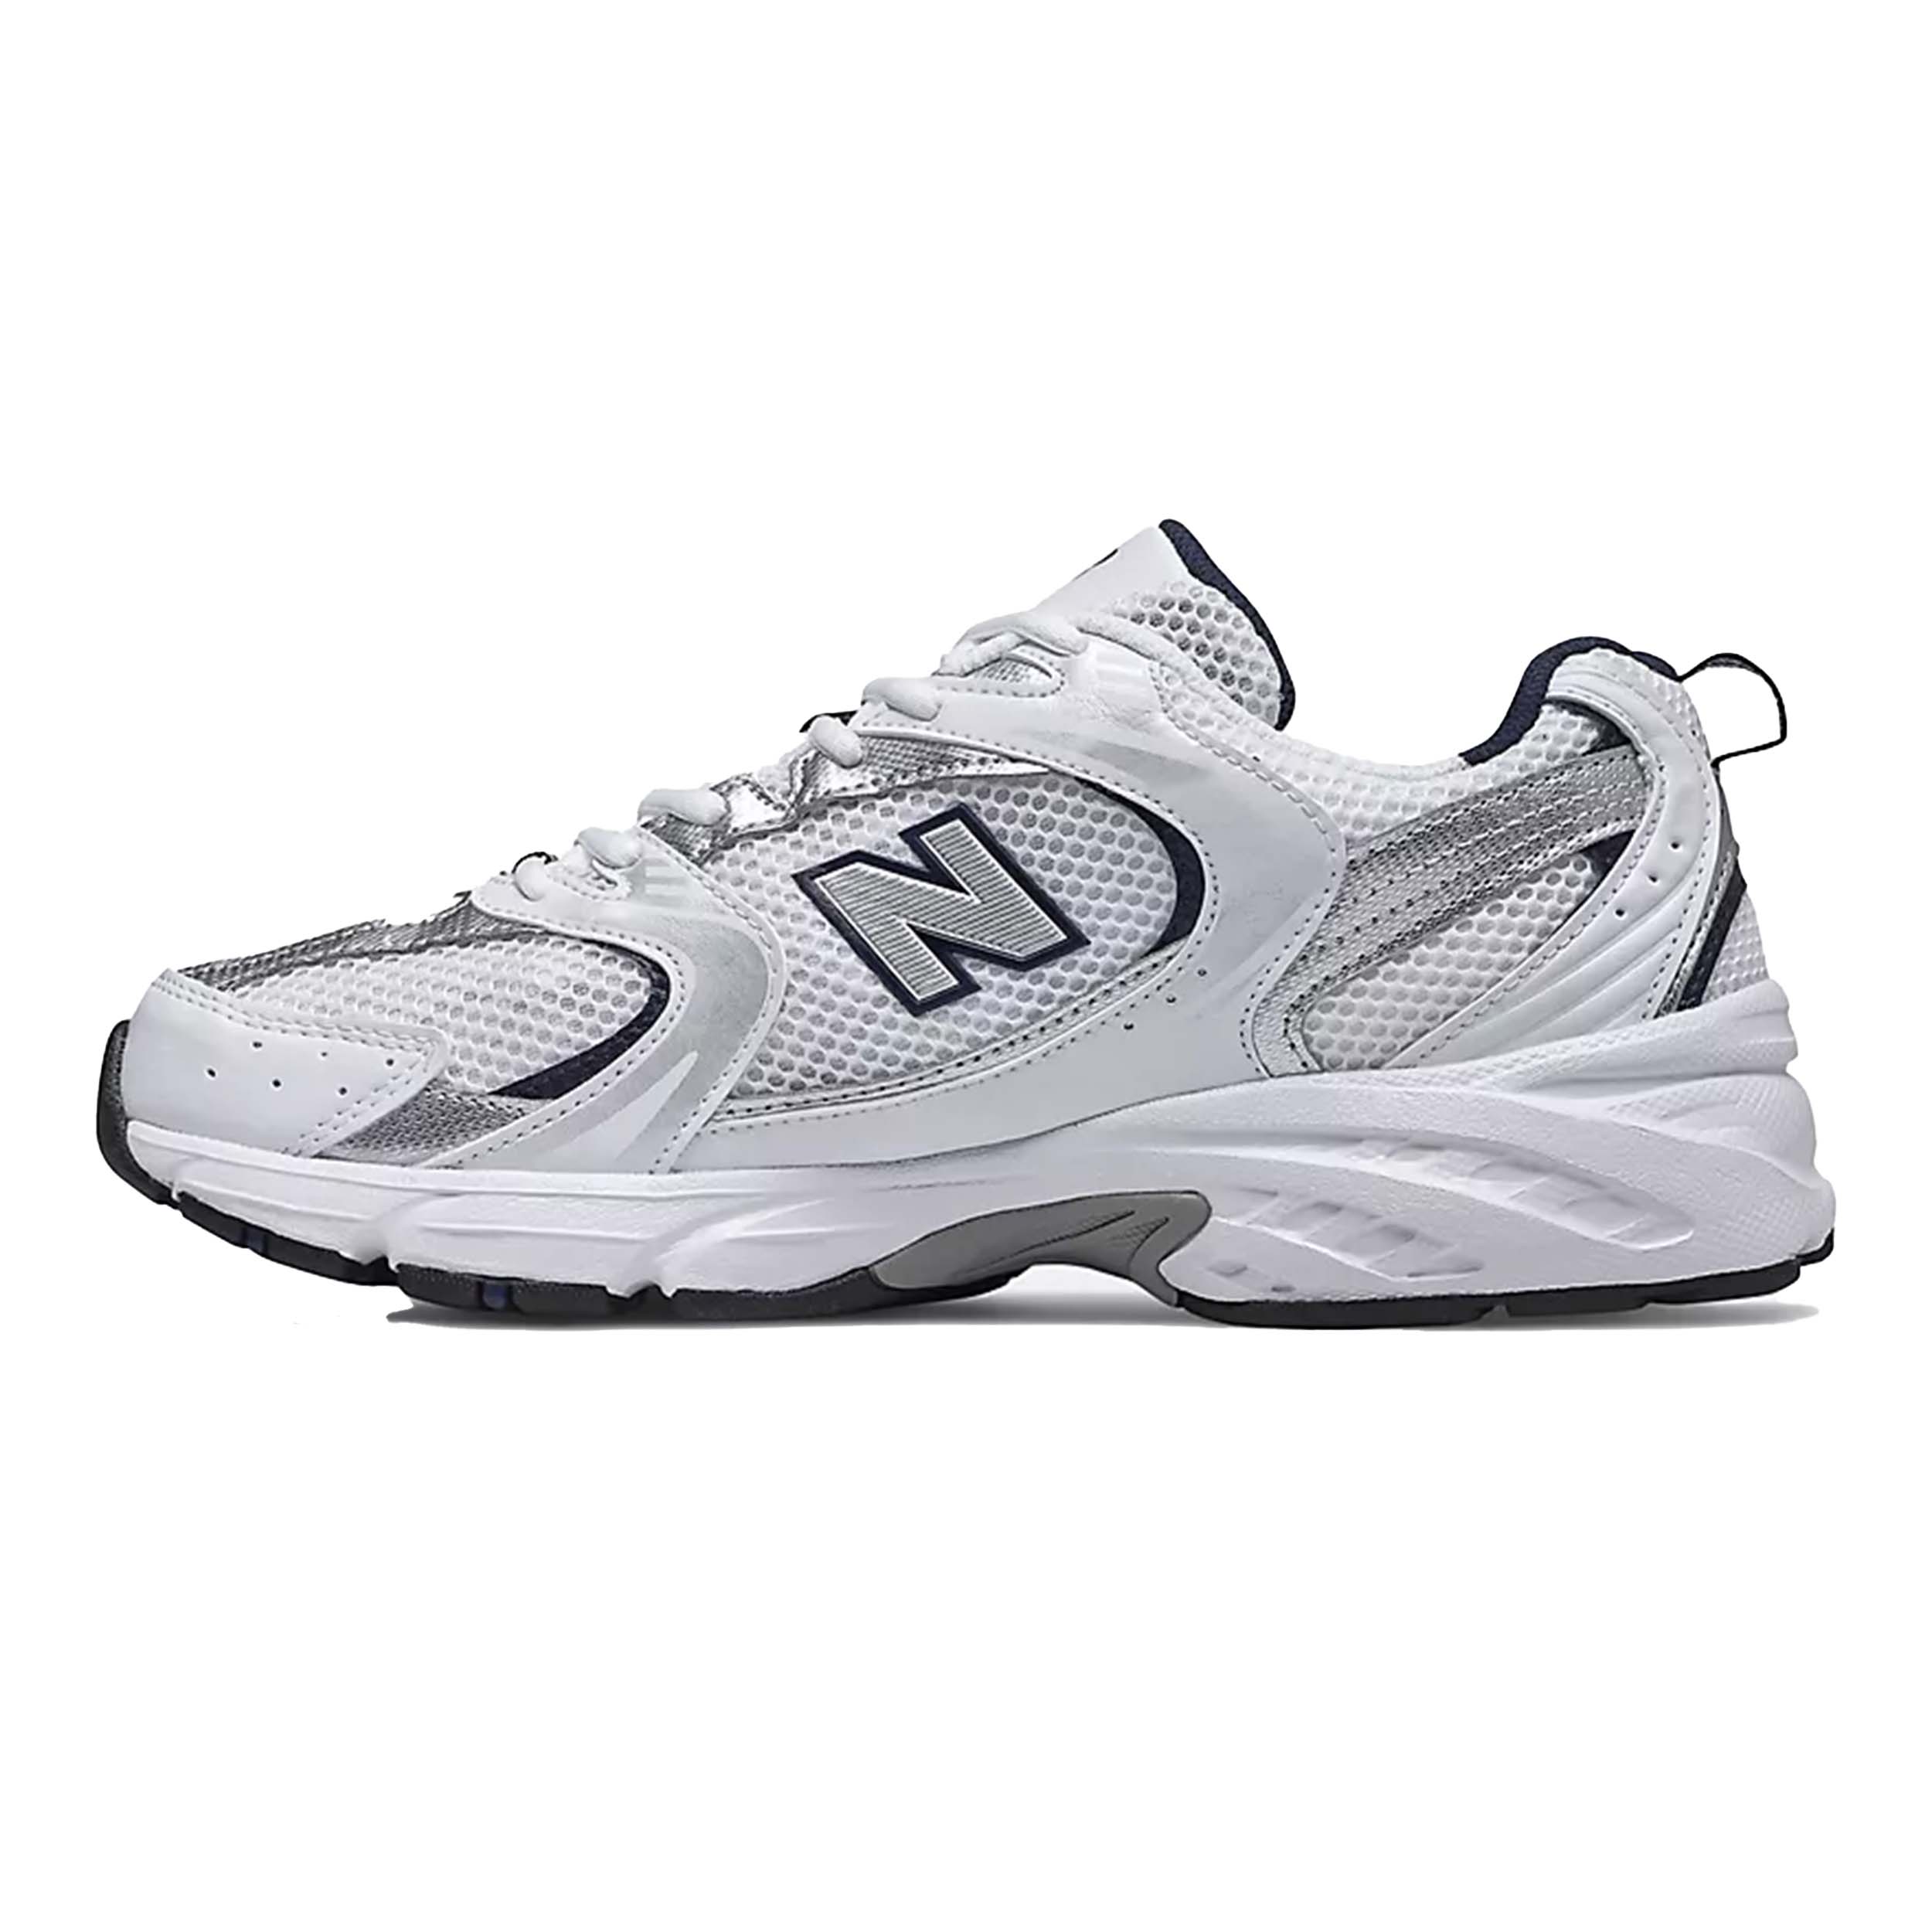 New Balance 530 Sneaker White/Natural Indigo